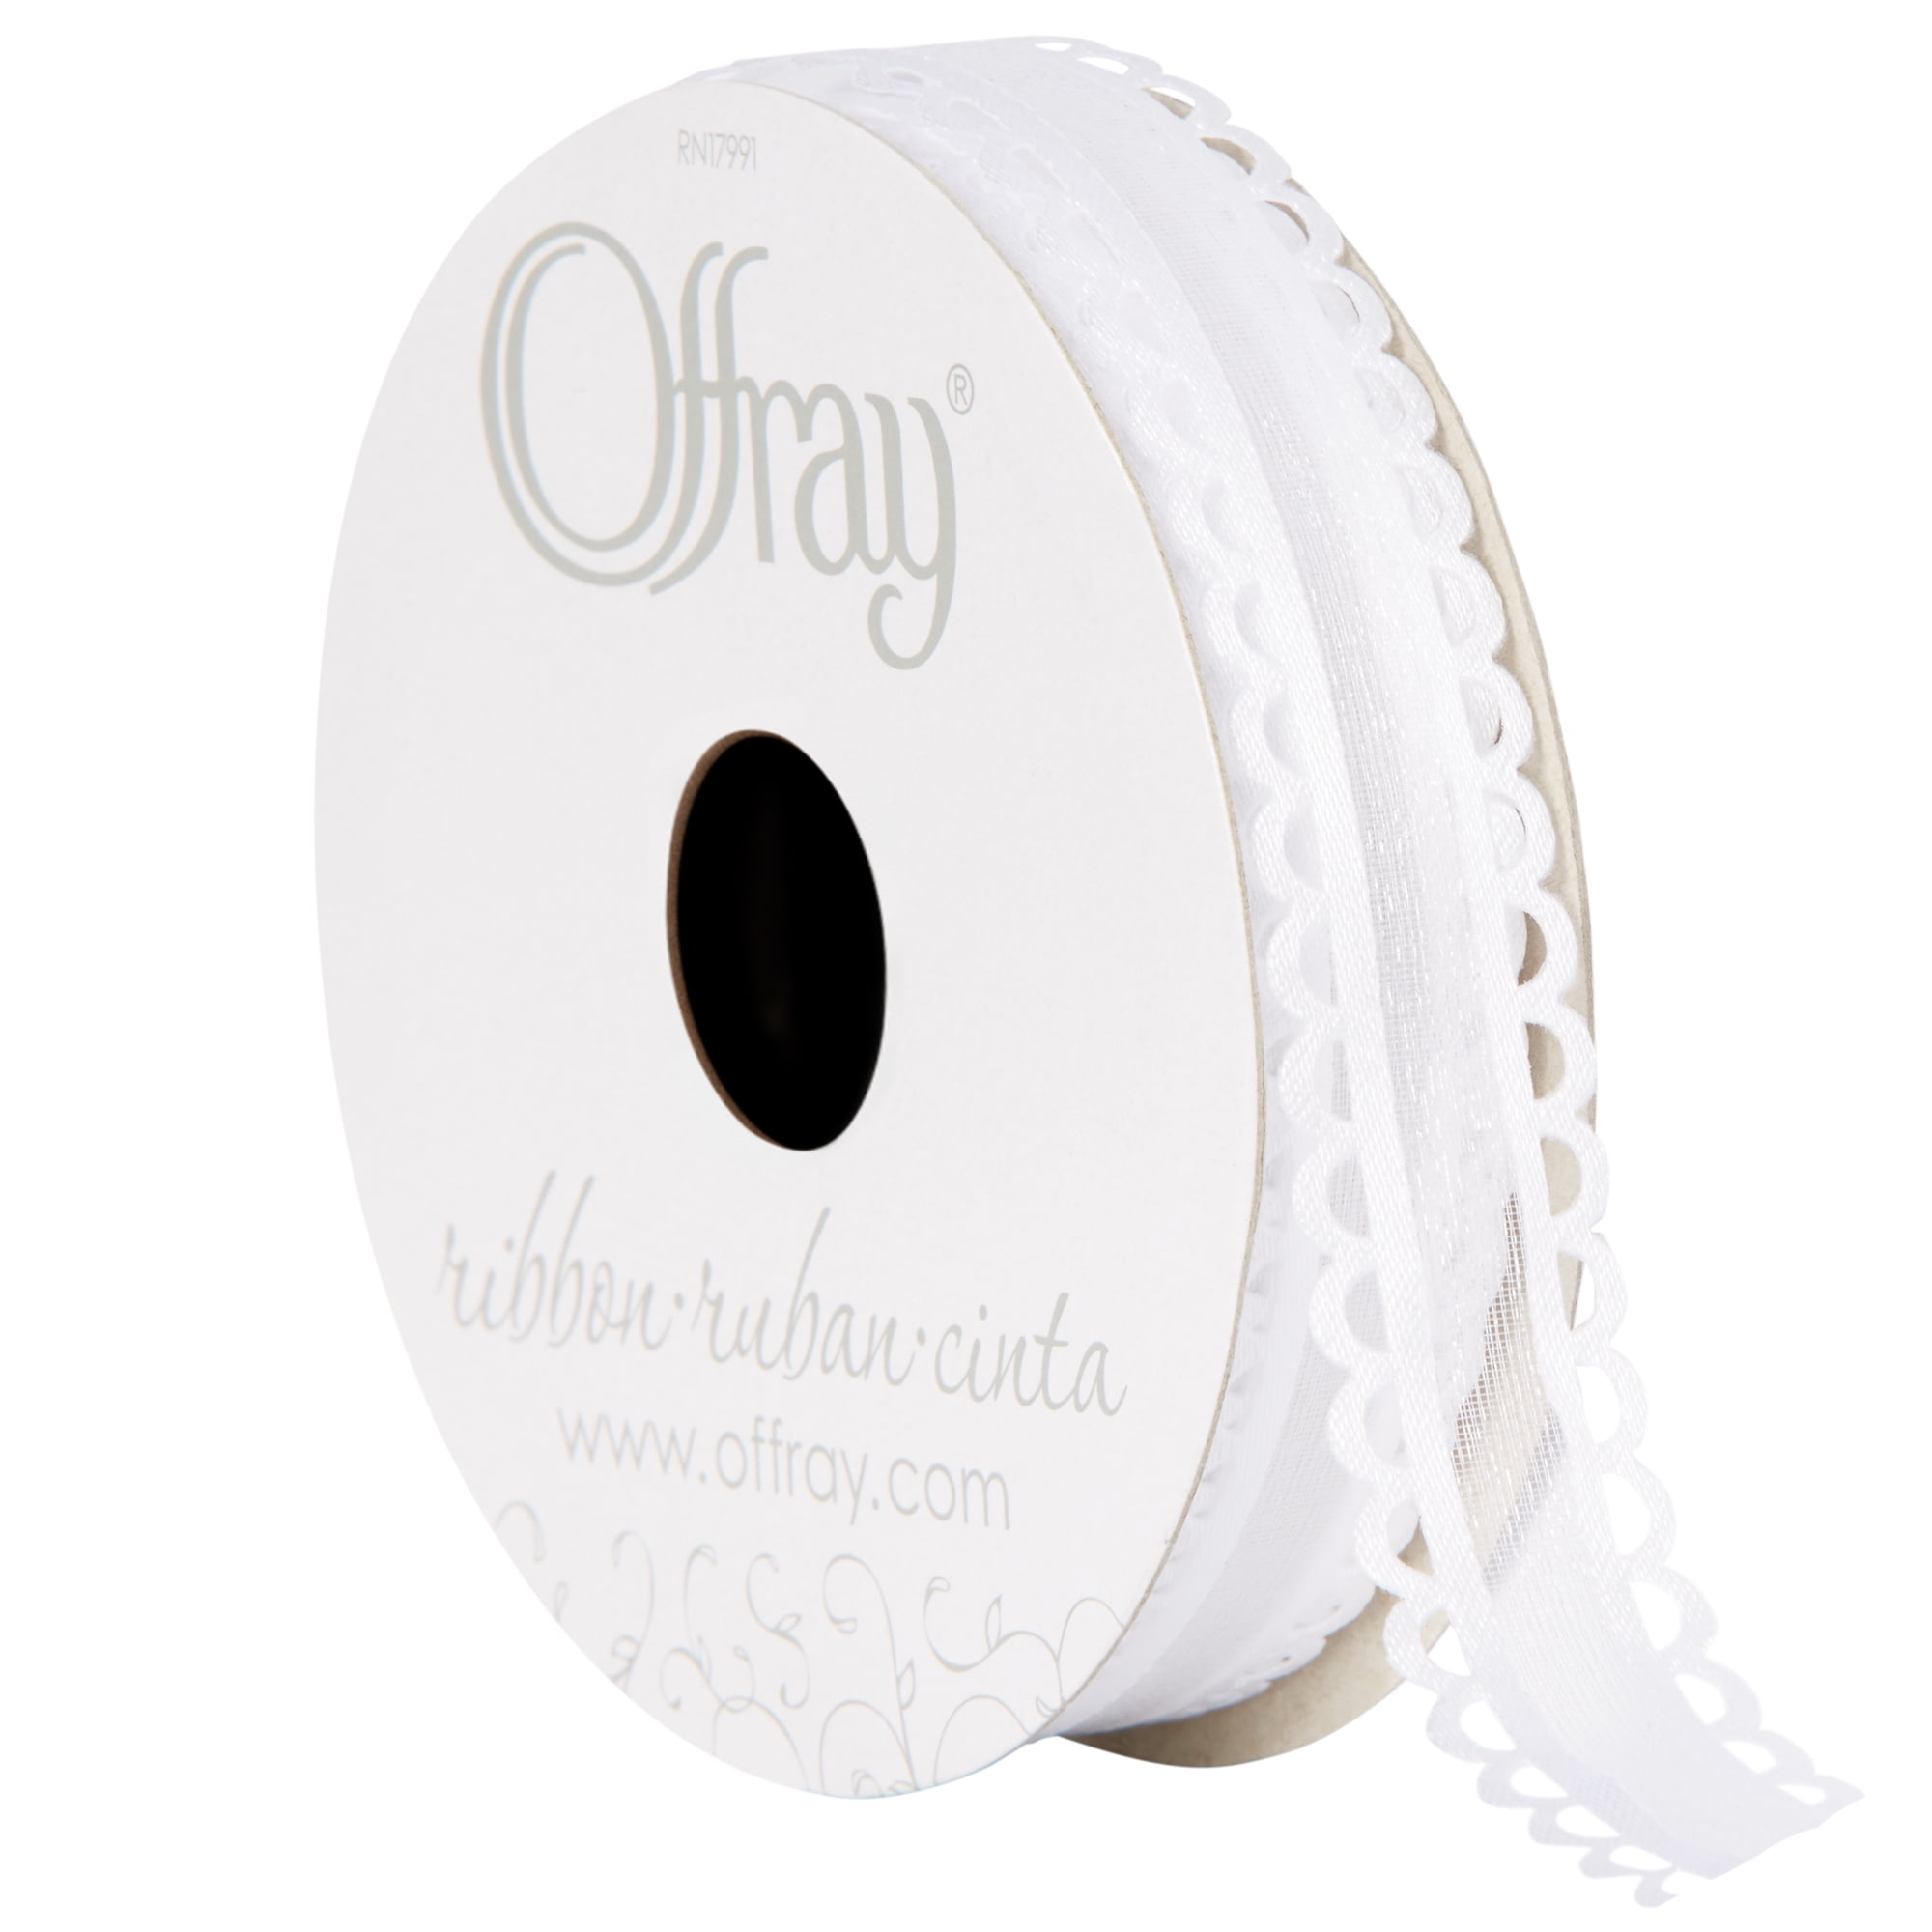 Offray Ribbon, White 5/8 inch Sheer Ribbon, 9 feet